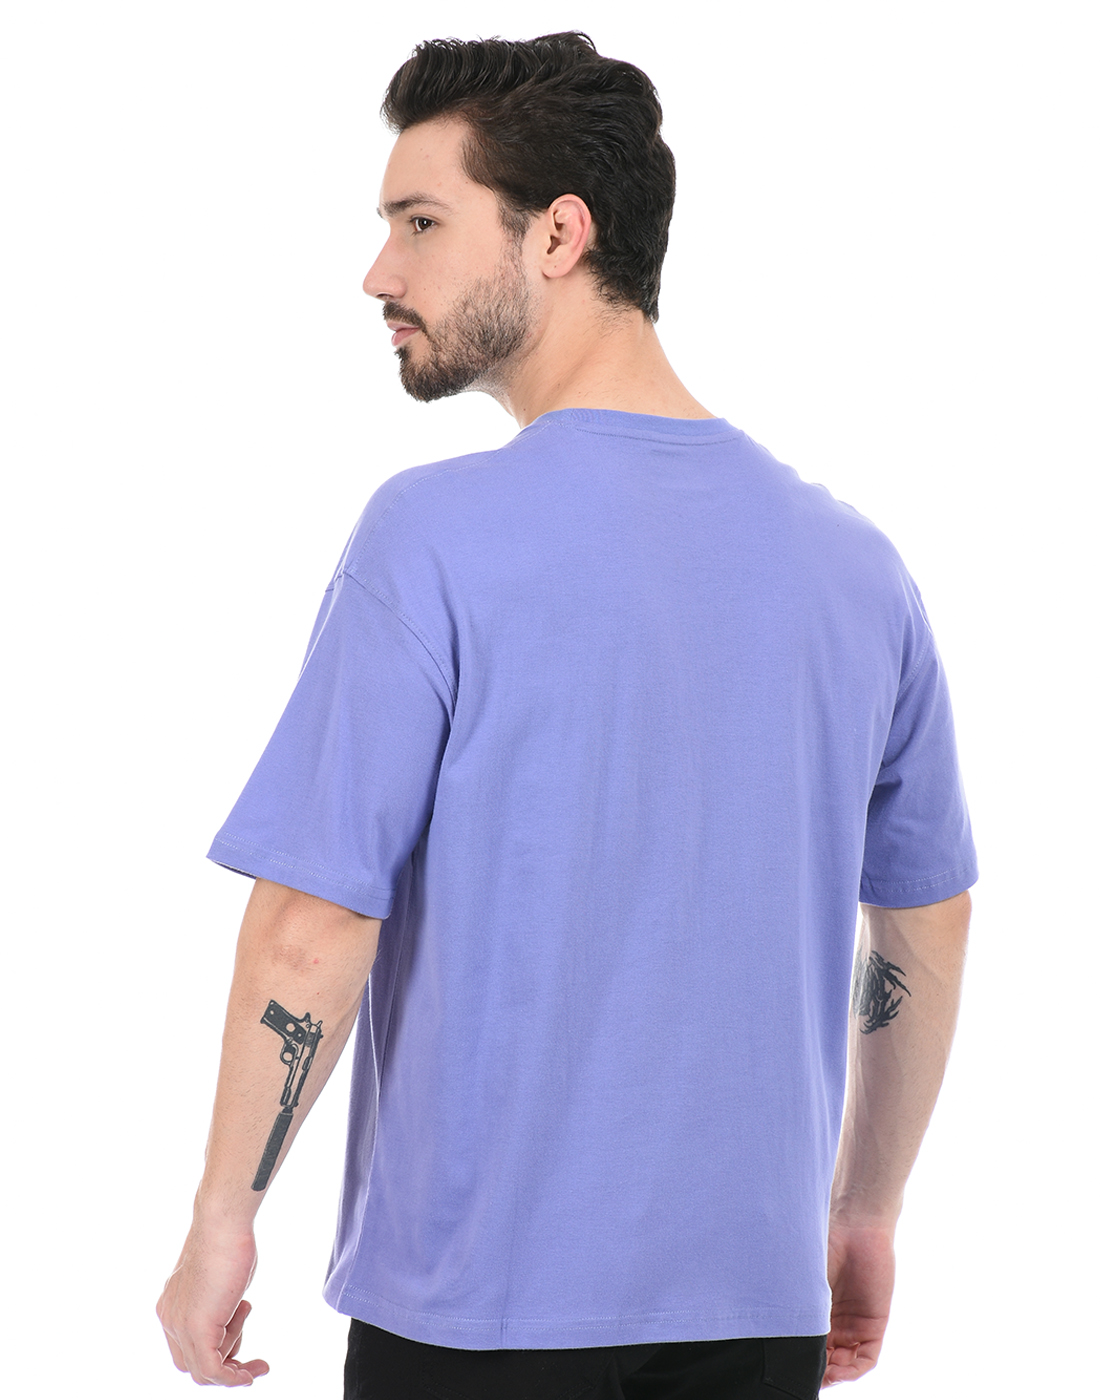 Oneway Unisex Solid Purple T-Shirt